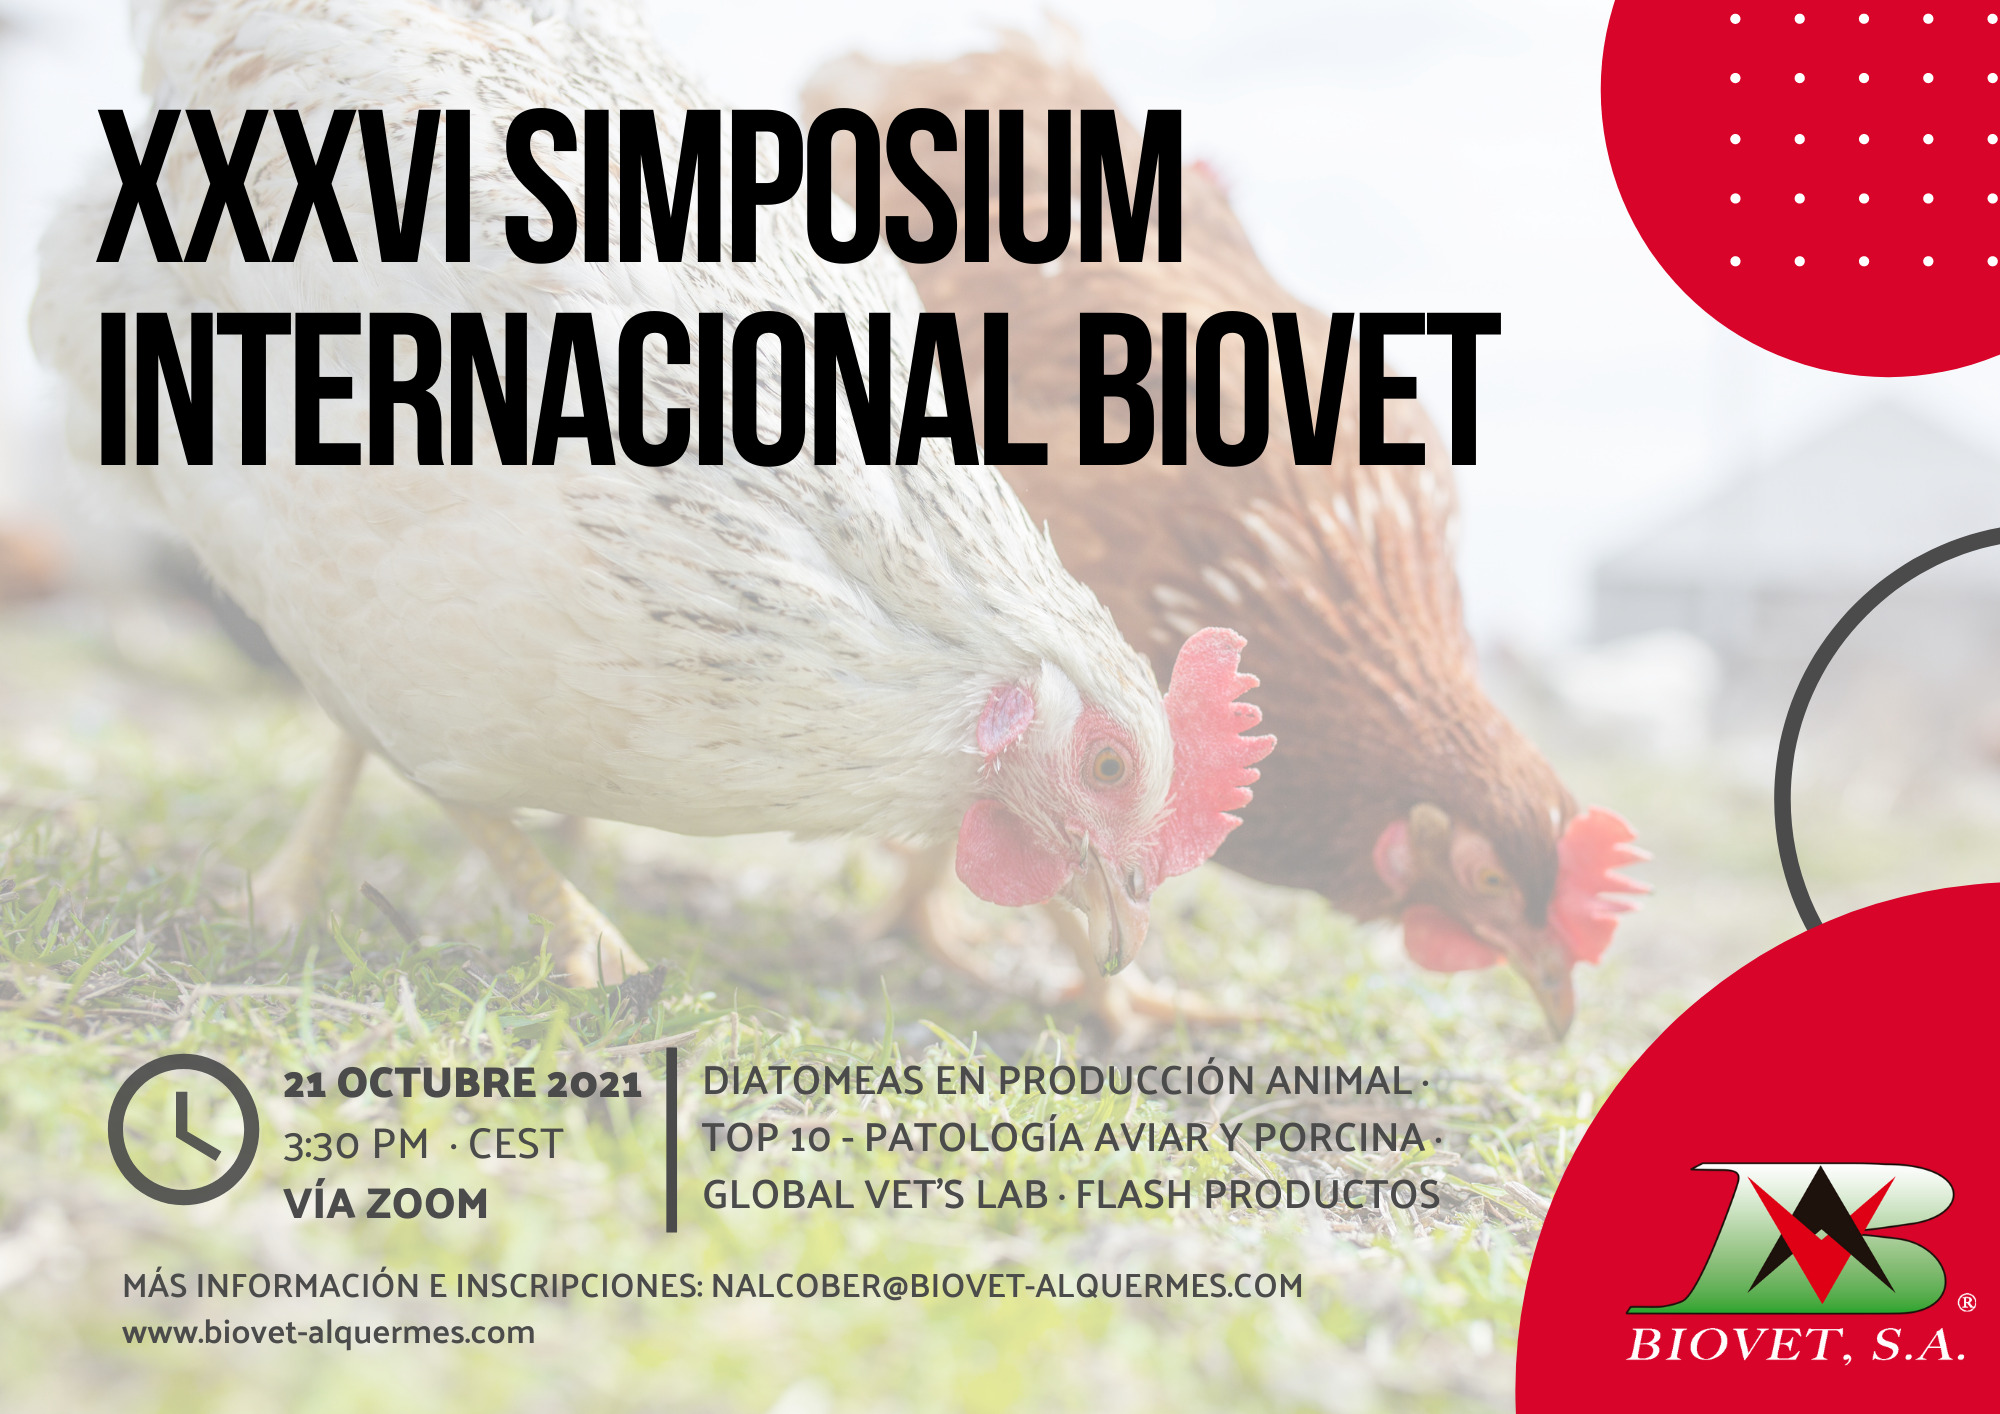 Simposium Internacional Biovet